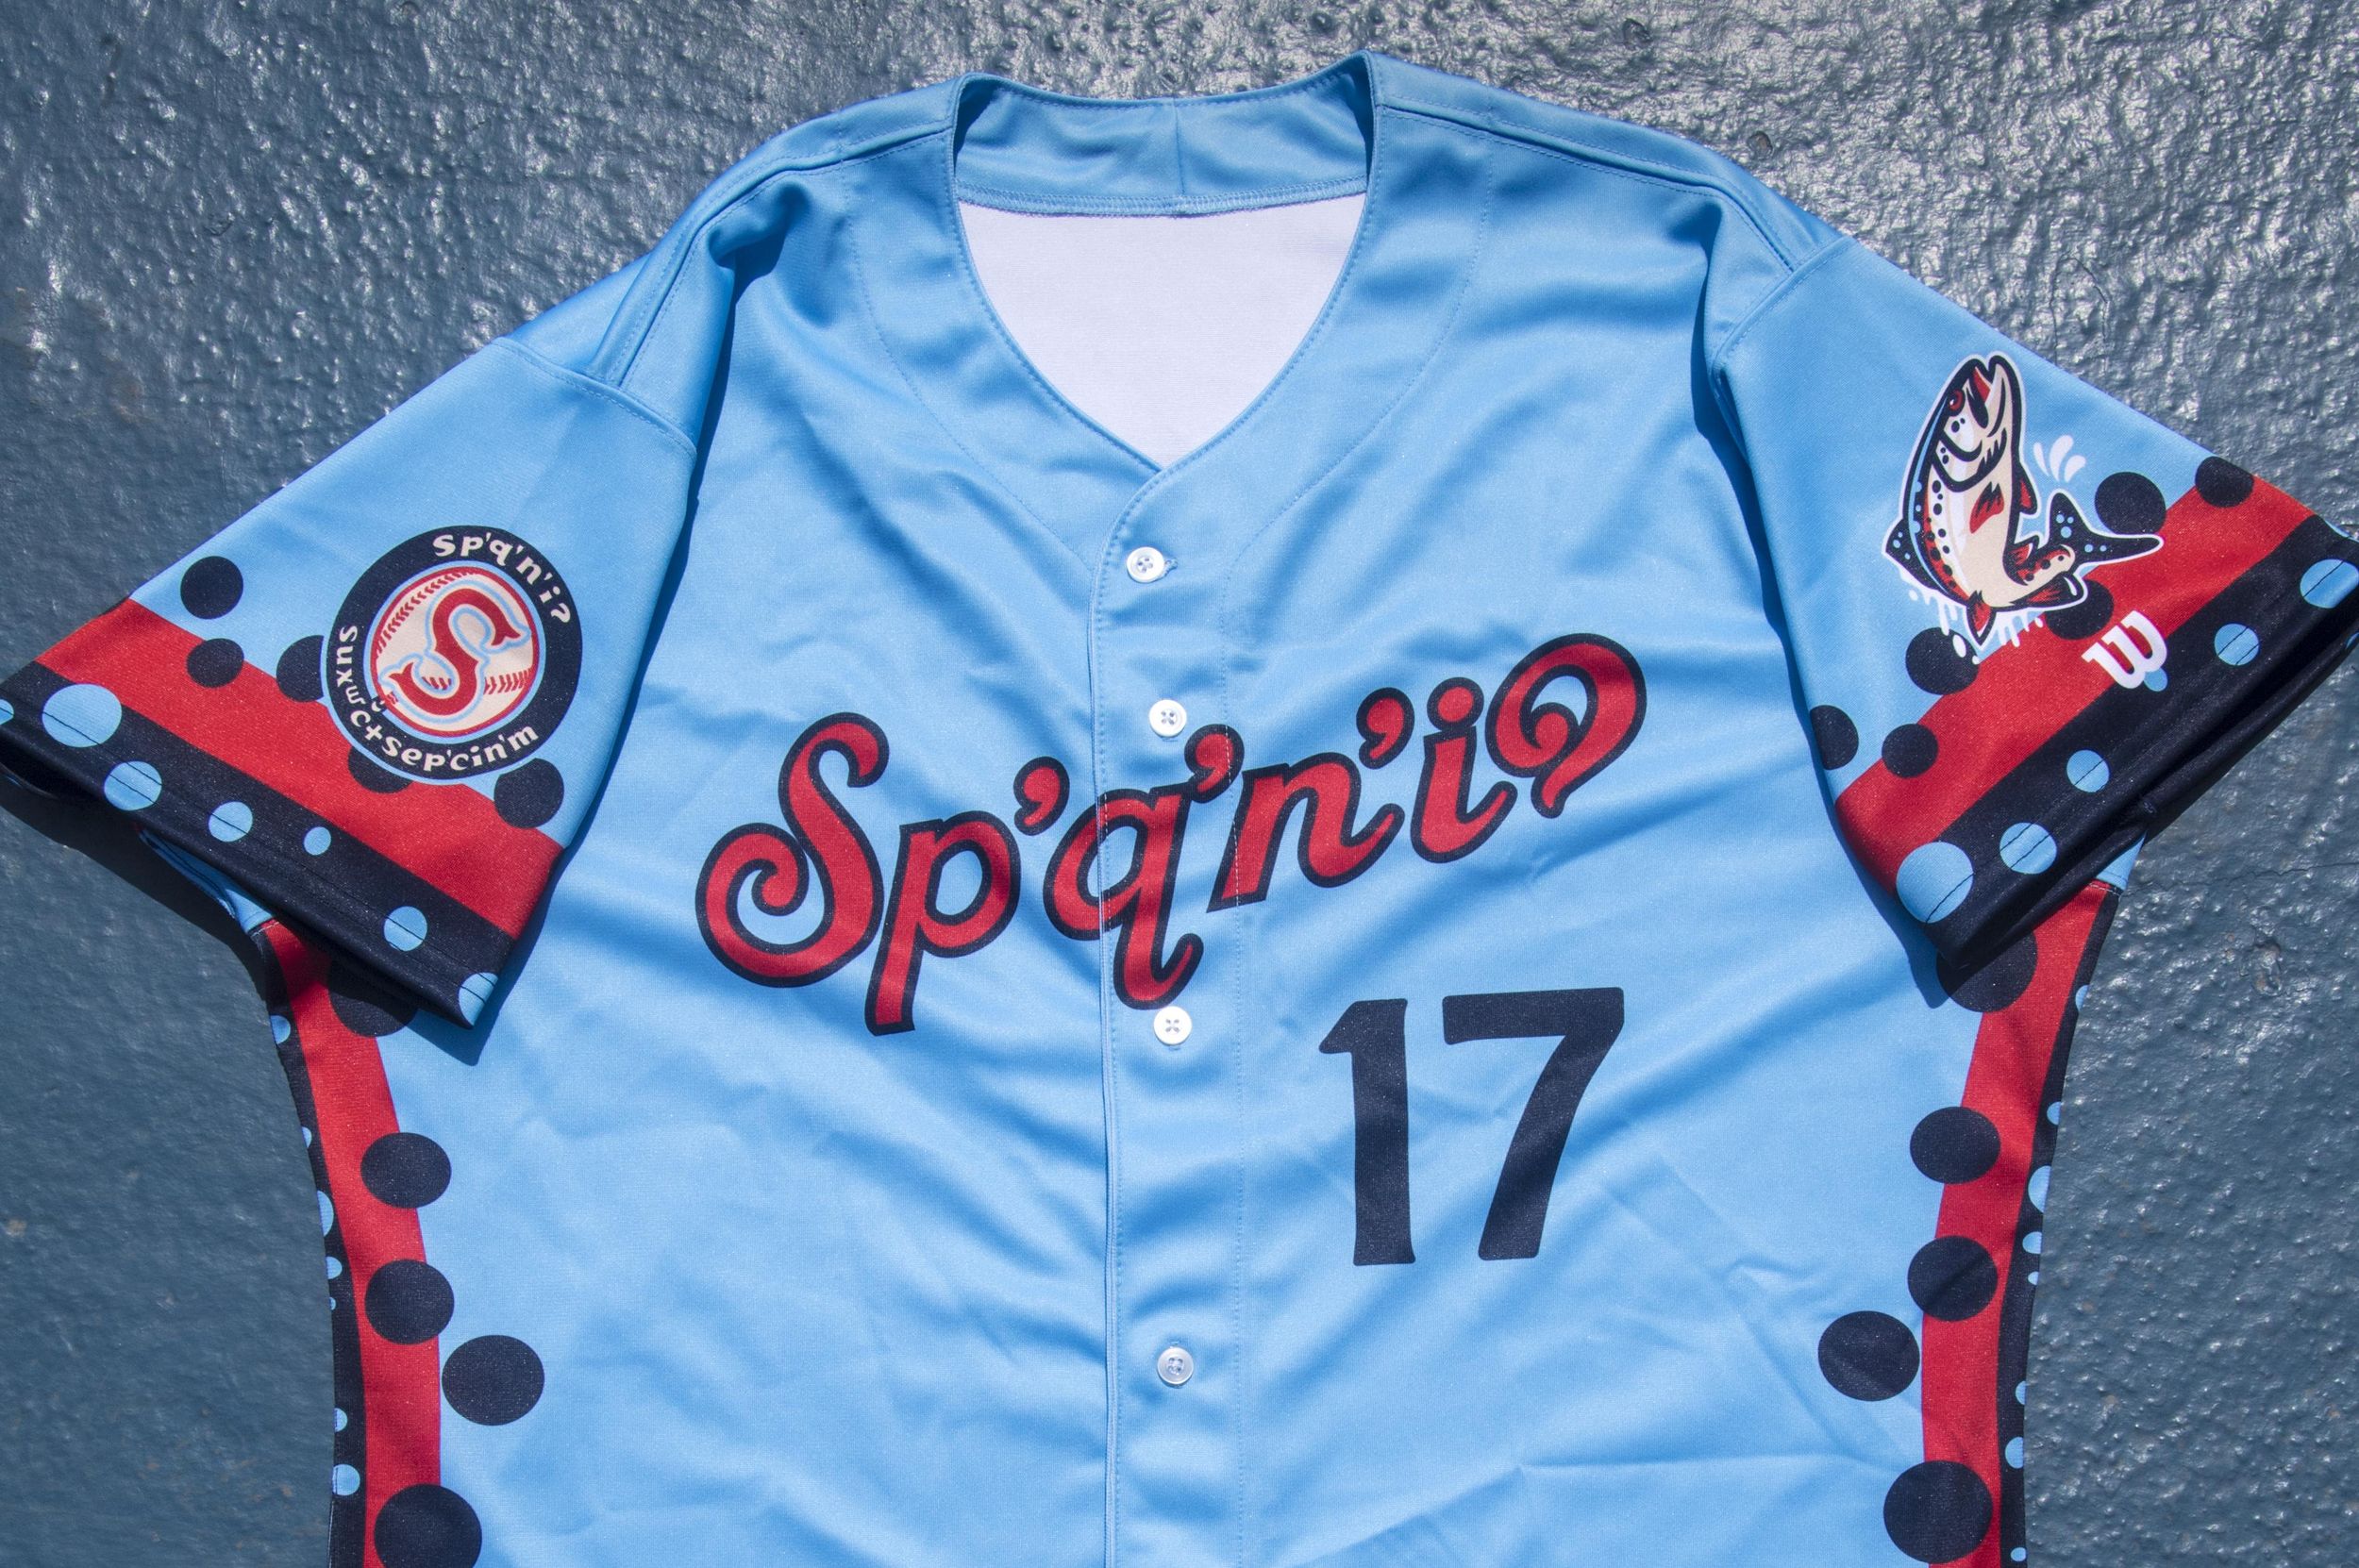 Spokane Indians - ‪Take a look at tonight's Star Wars jerseys‬